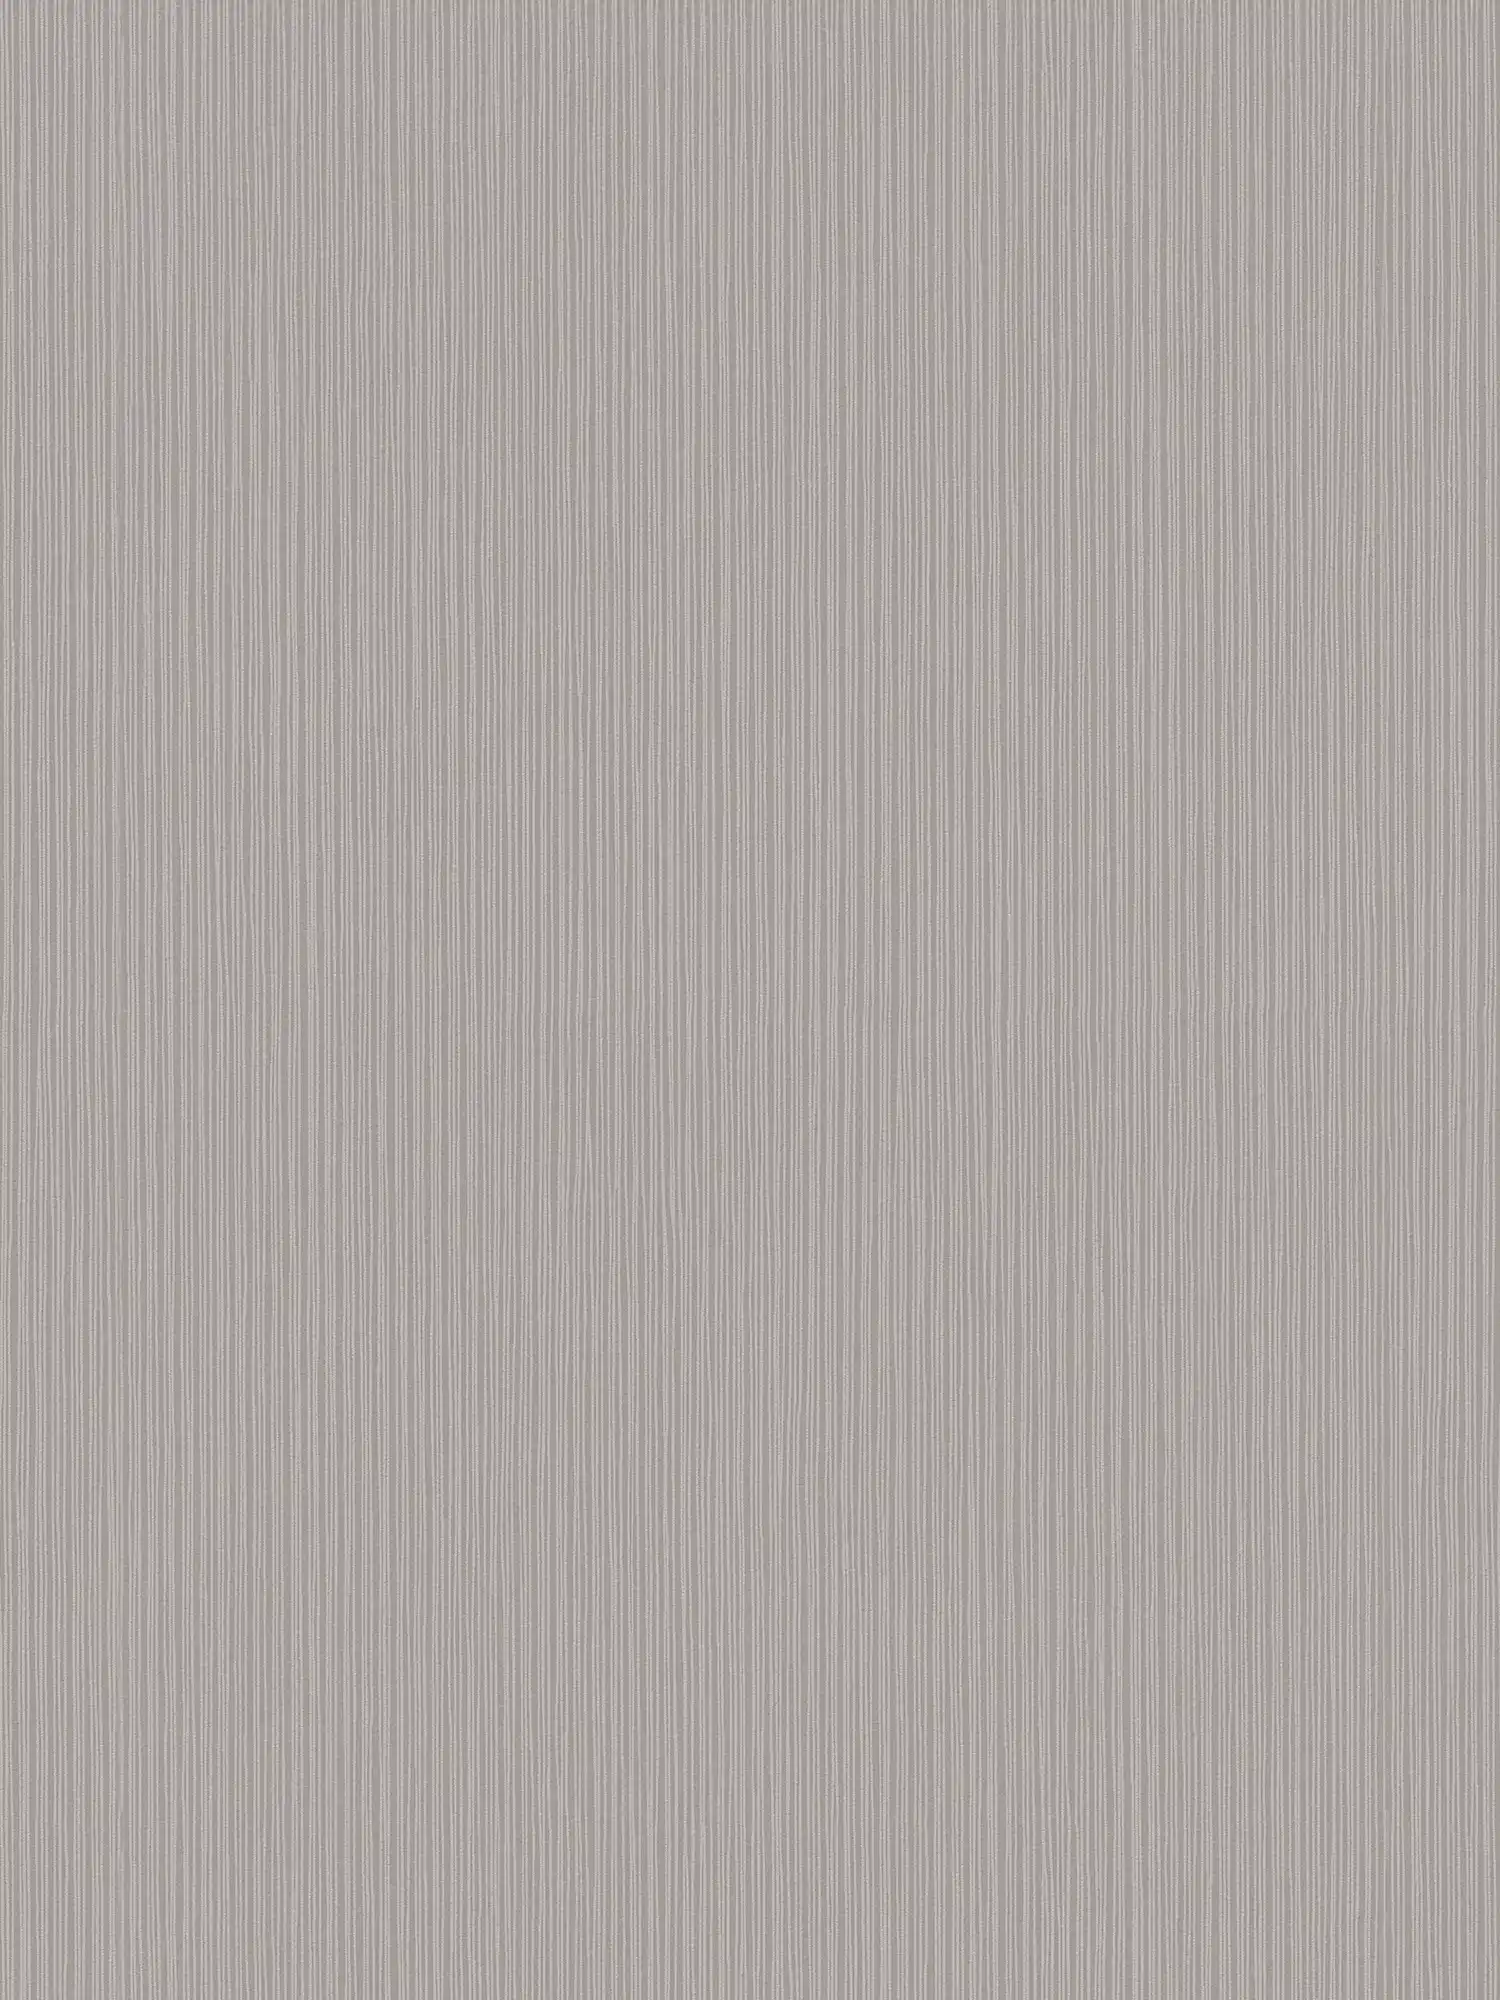 Non-woven wallpaper grey plain, narrow lines pattern
